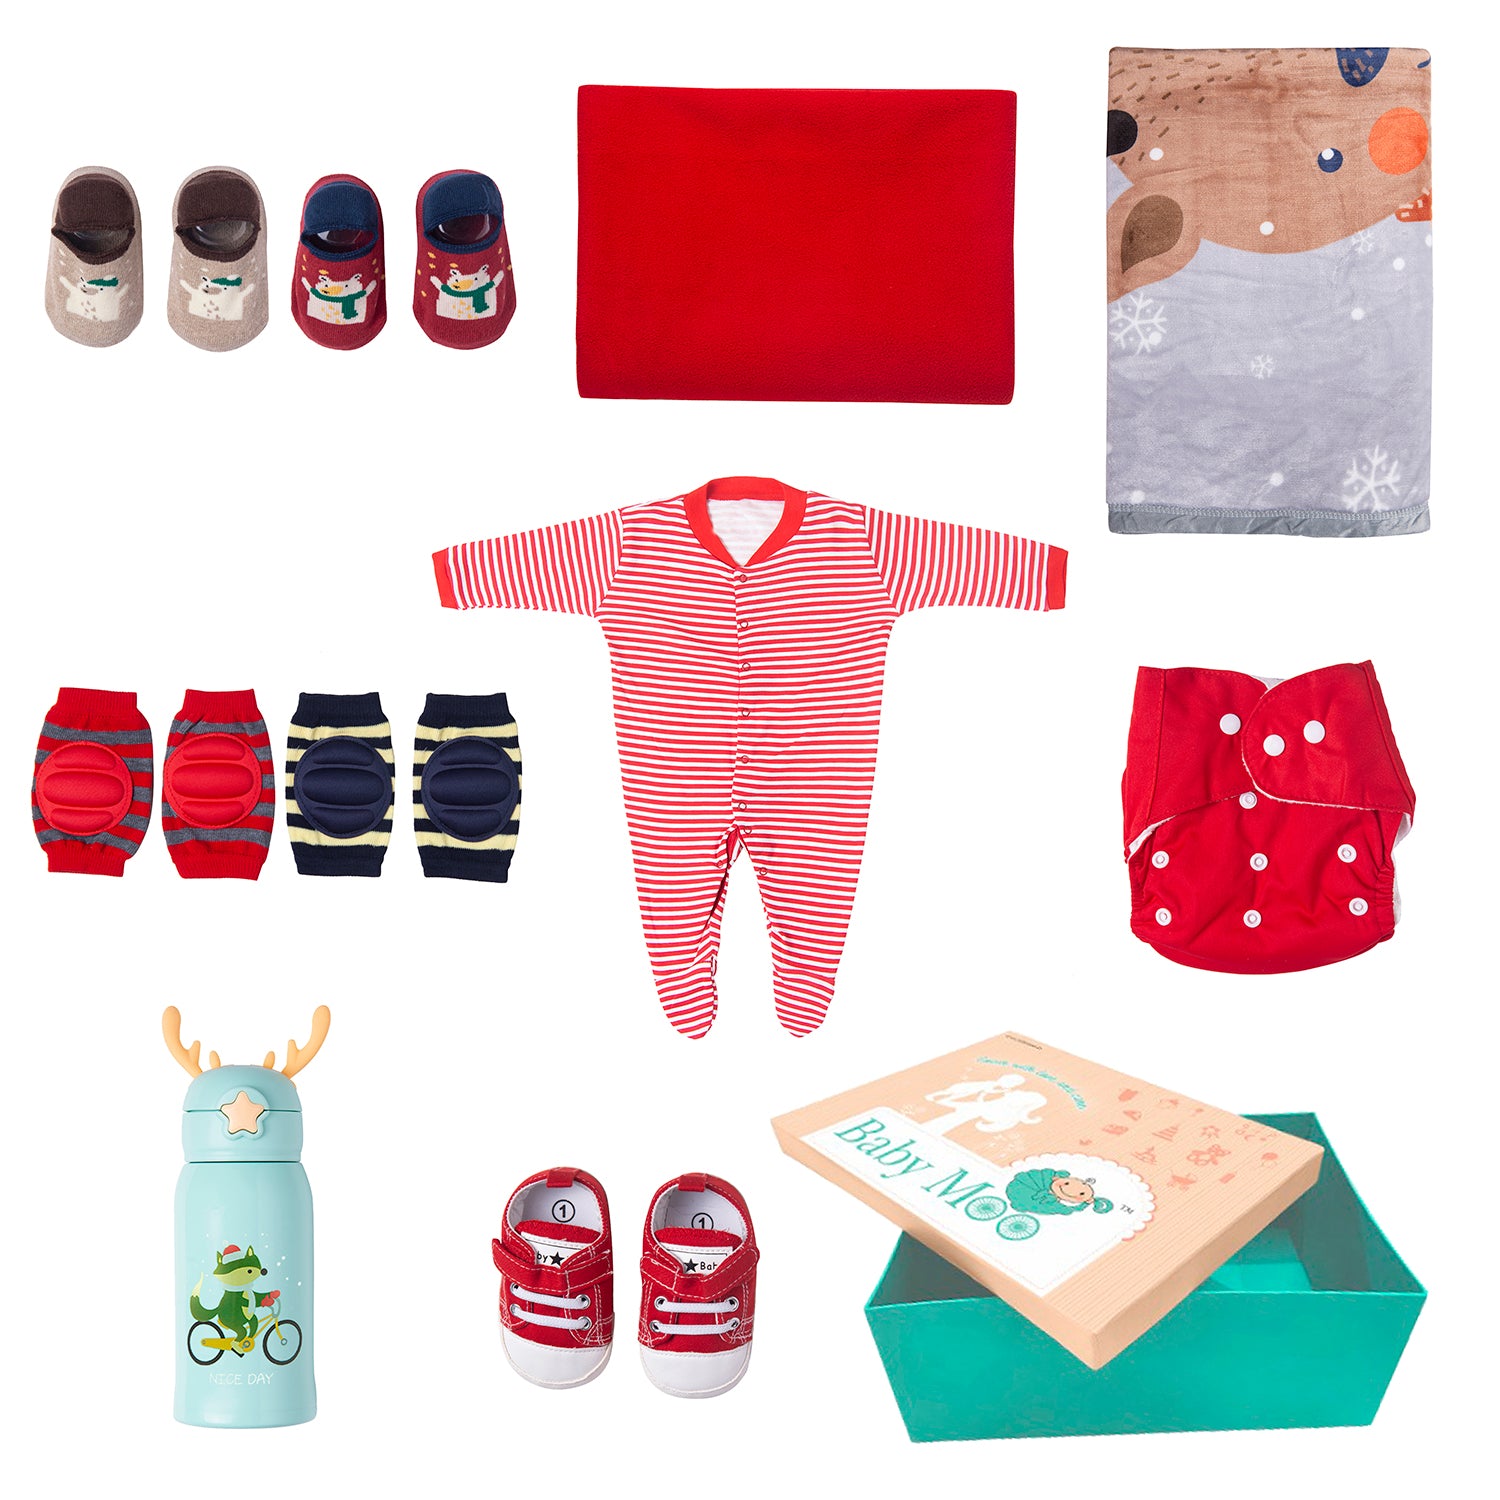 Wonderland Unisex Gift Hamper With Blanket, Romper, Socks And More - Baby Moo